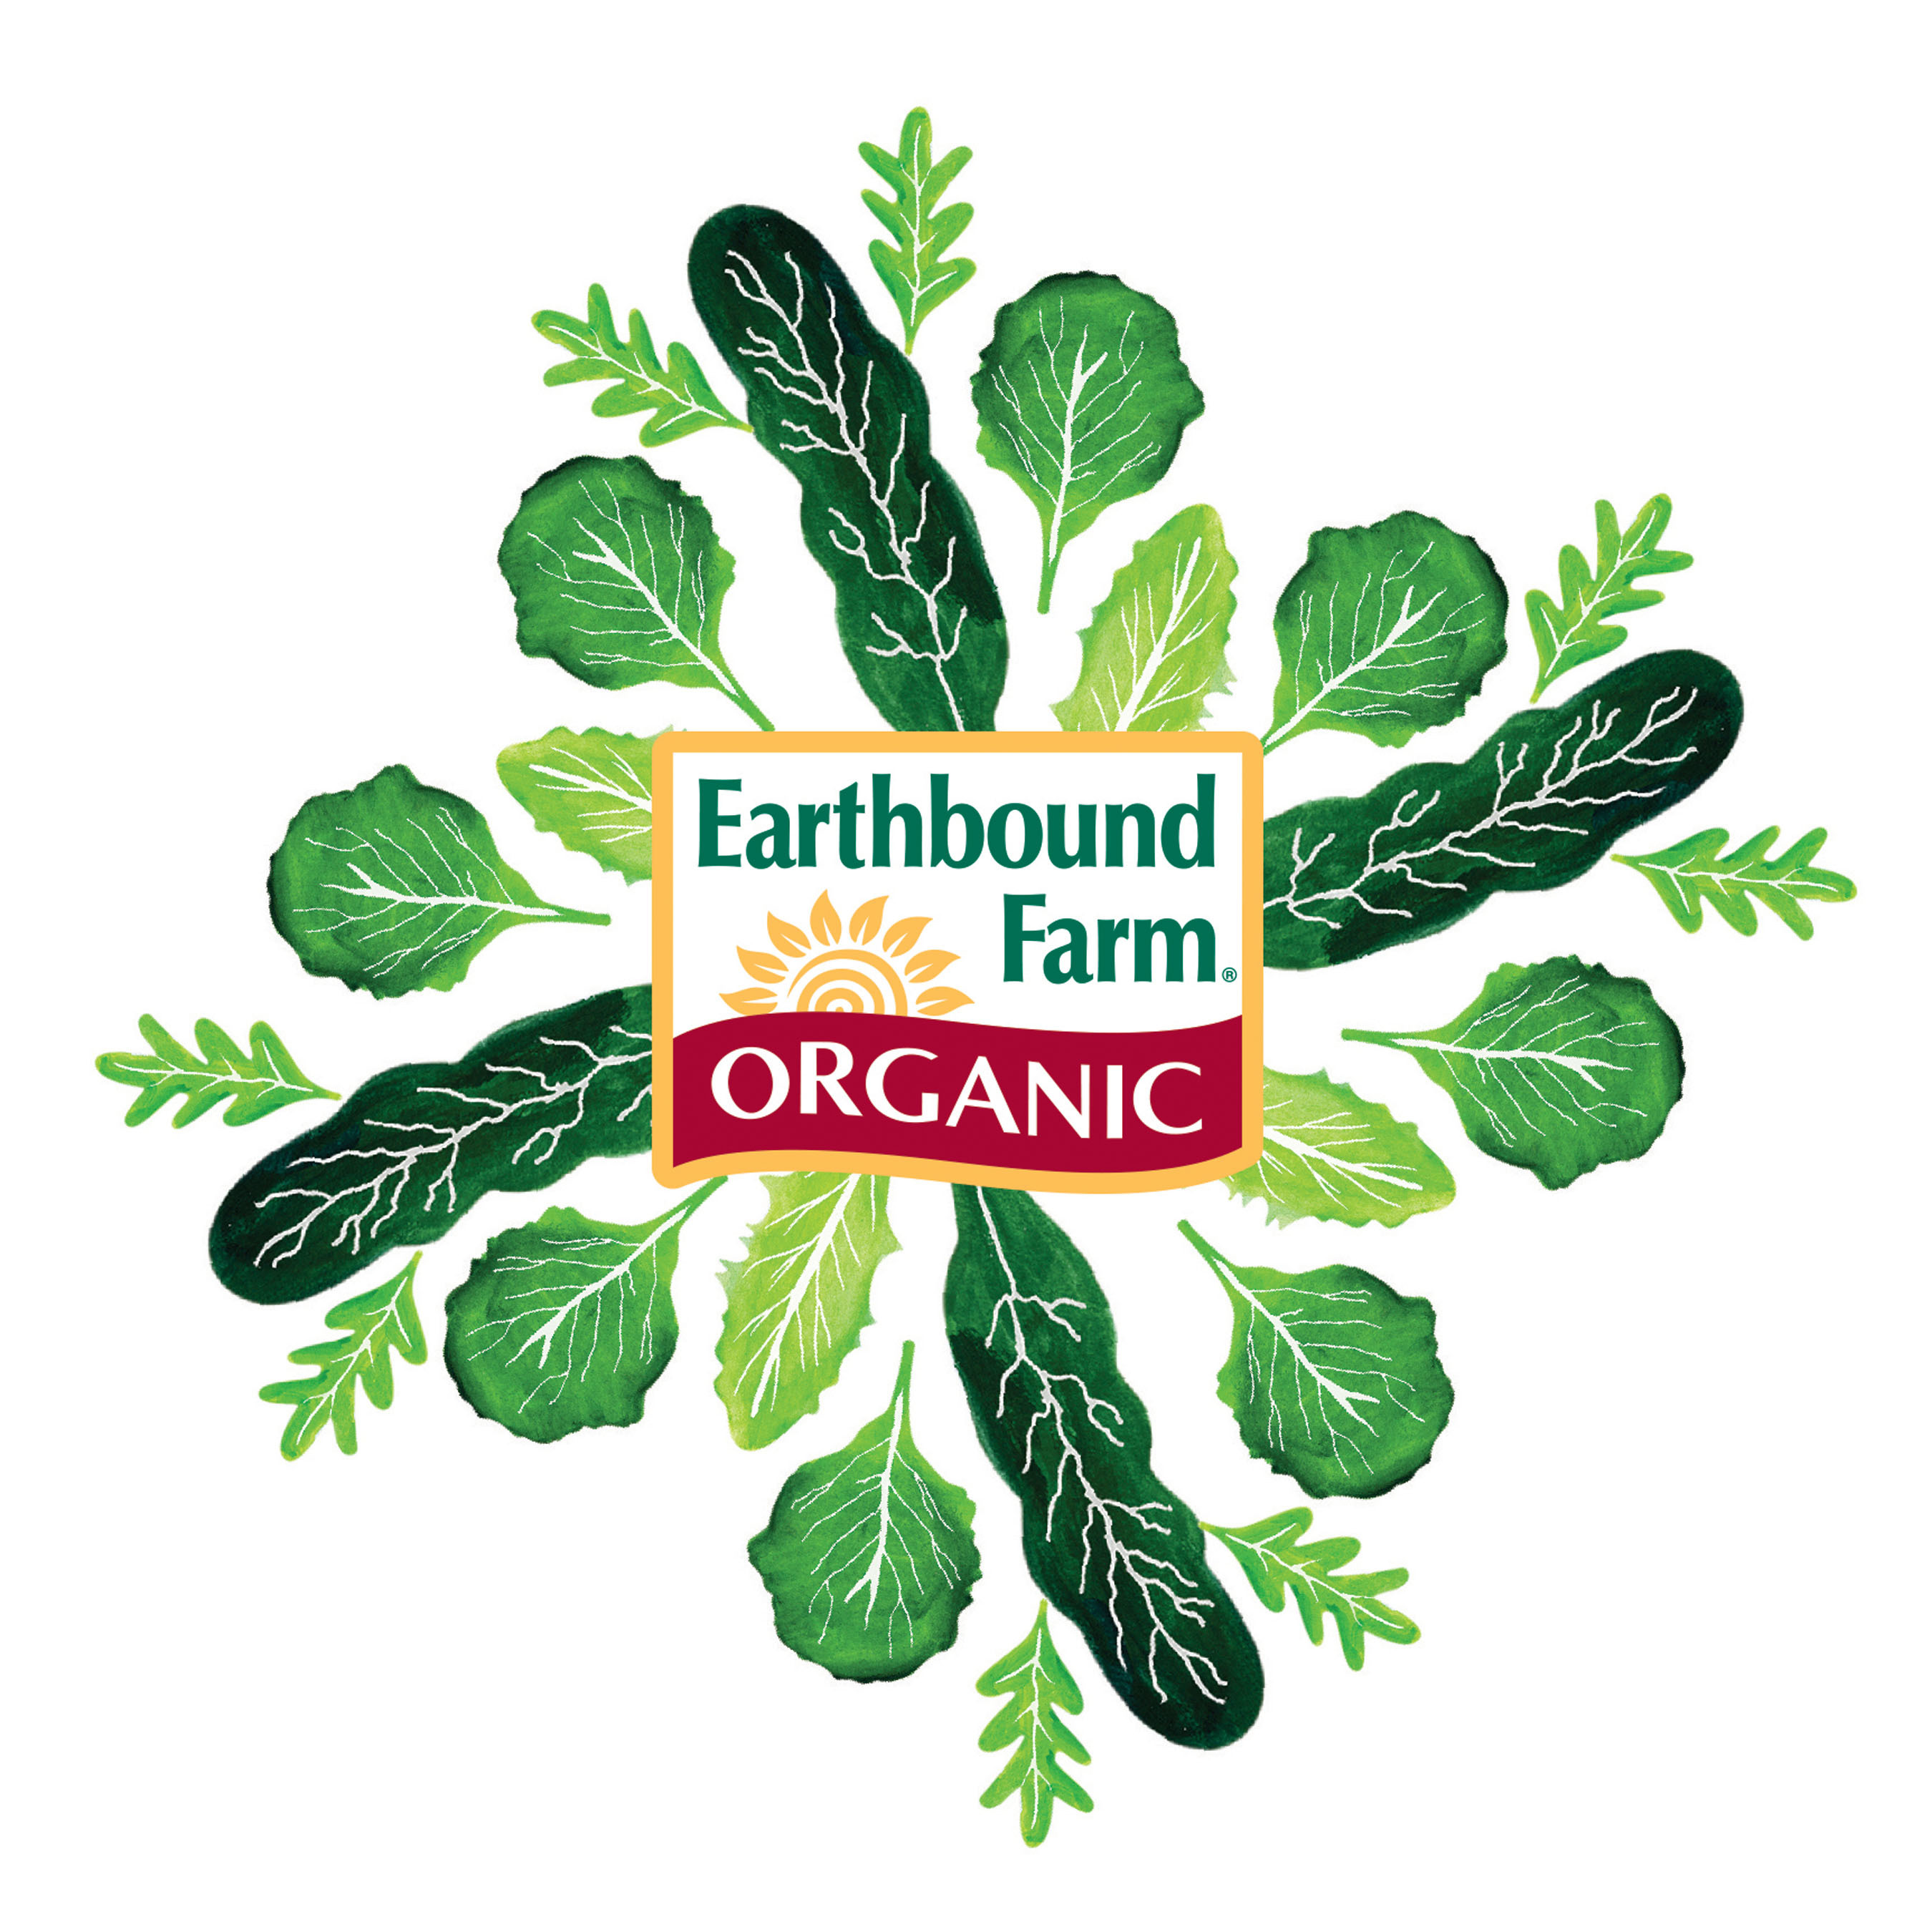 Earthbound Farm logo